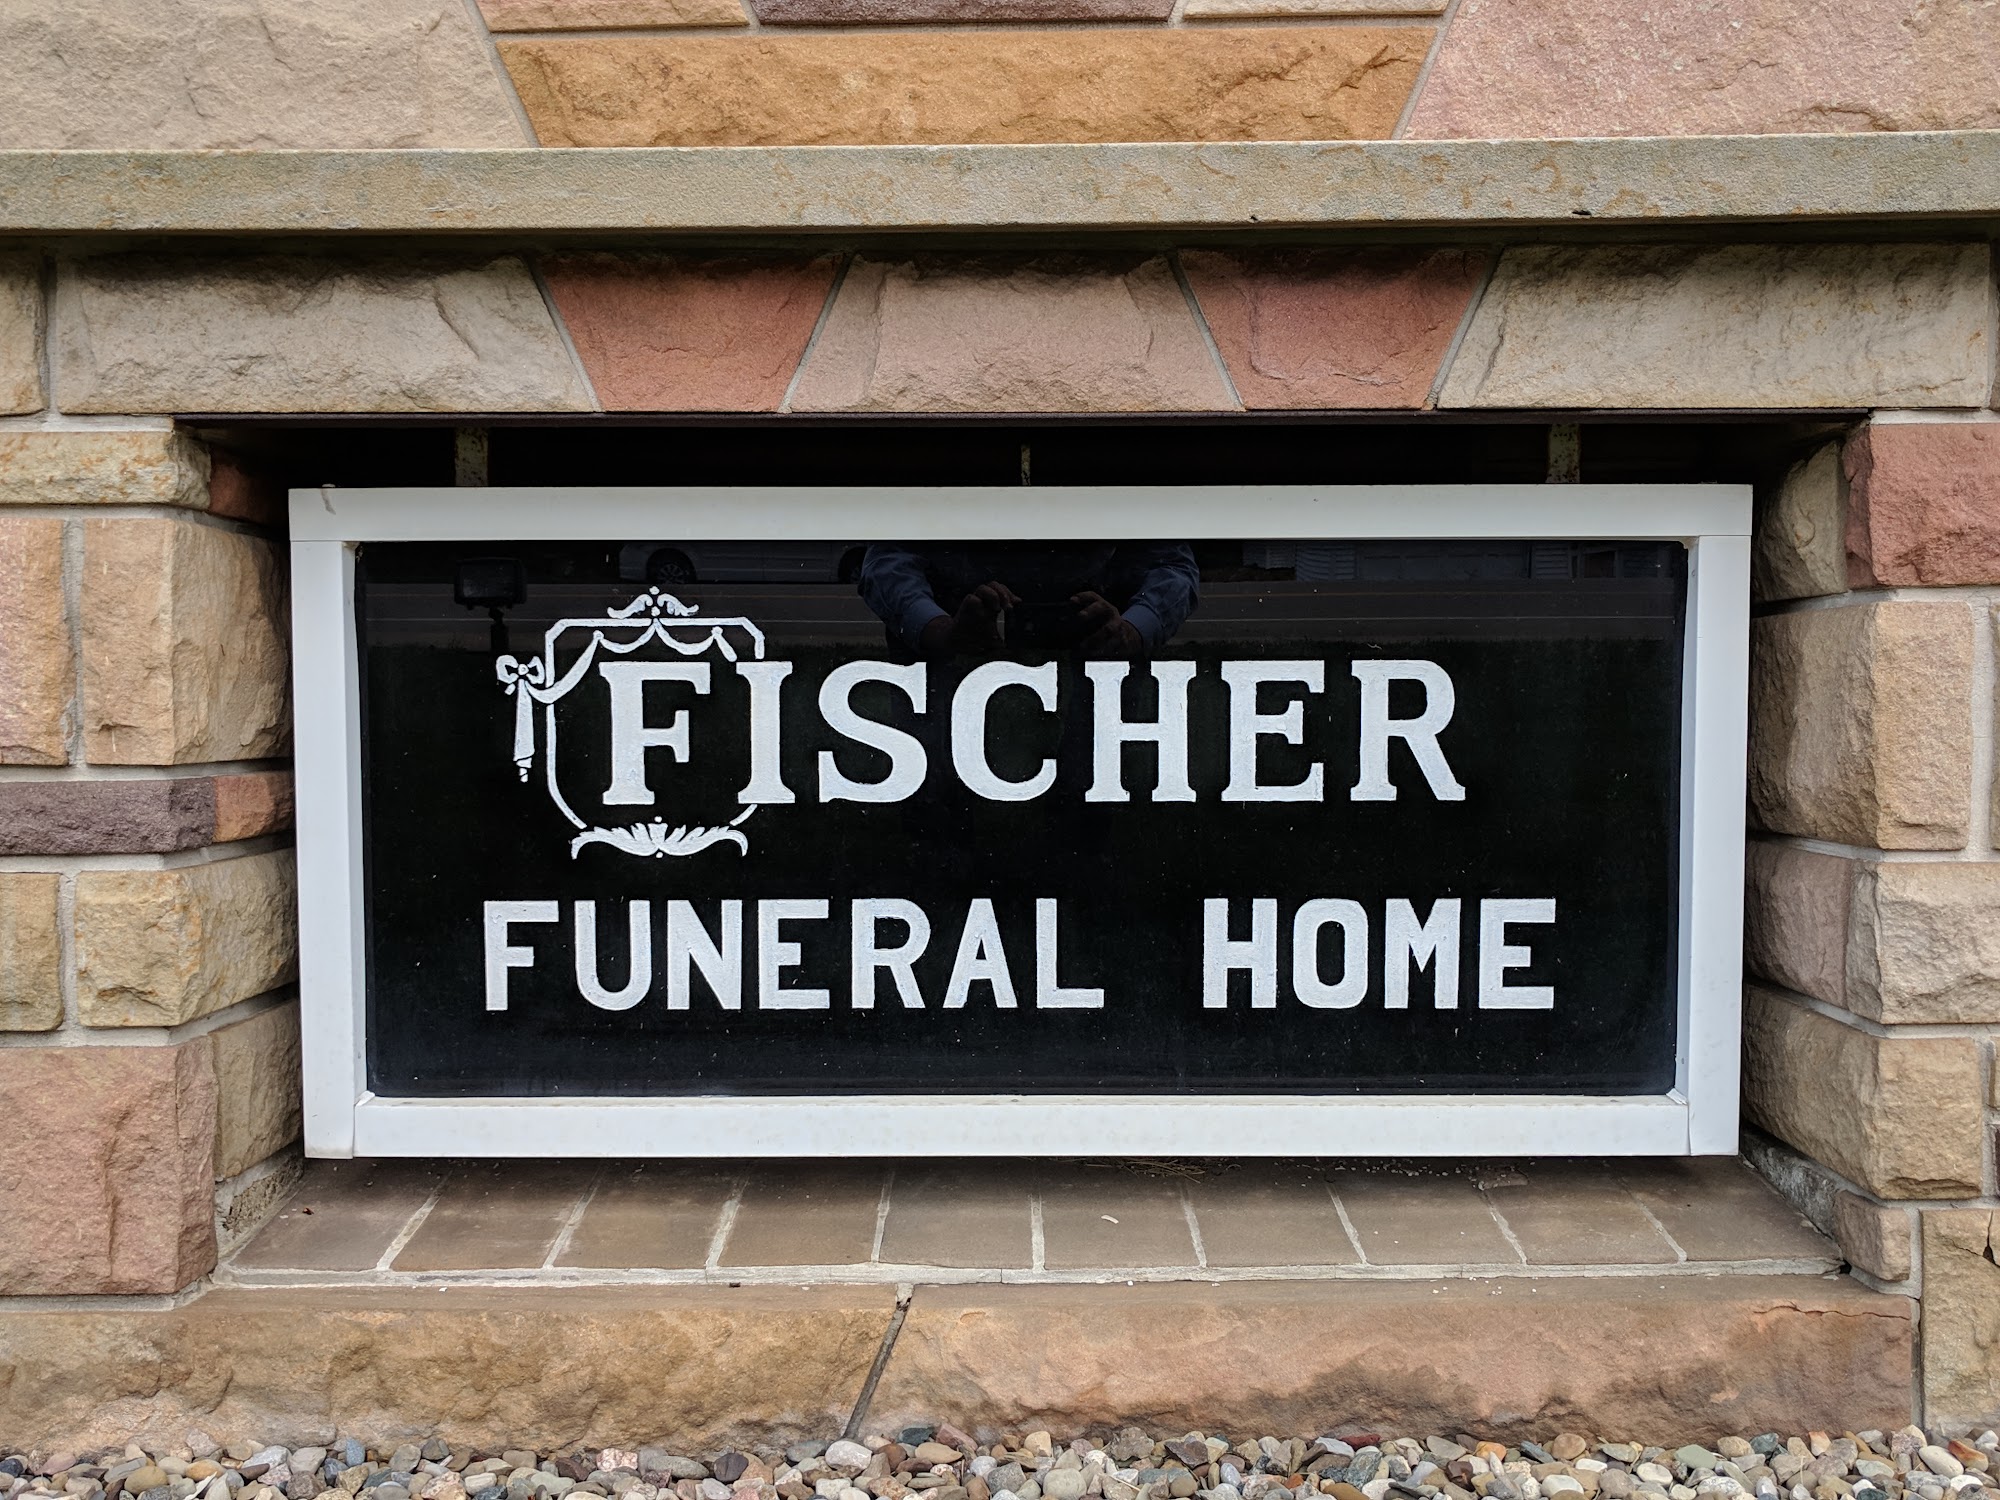 Fischer Funeral Home